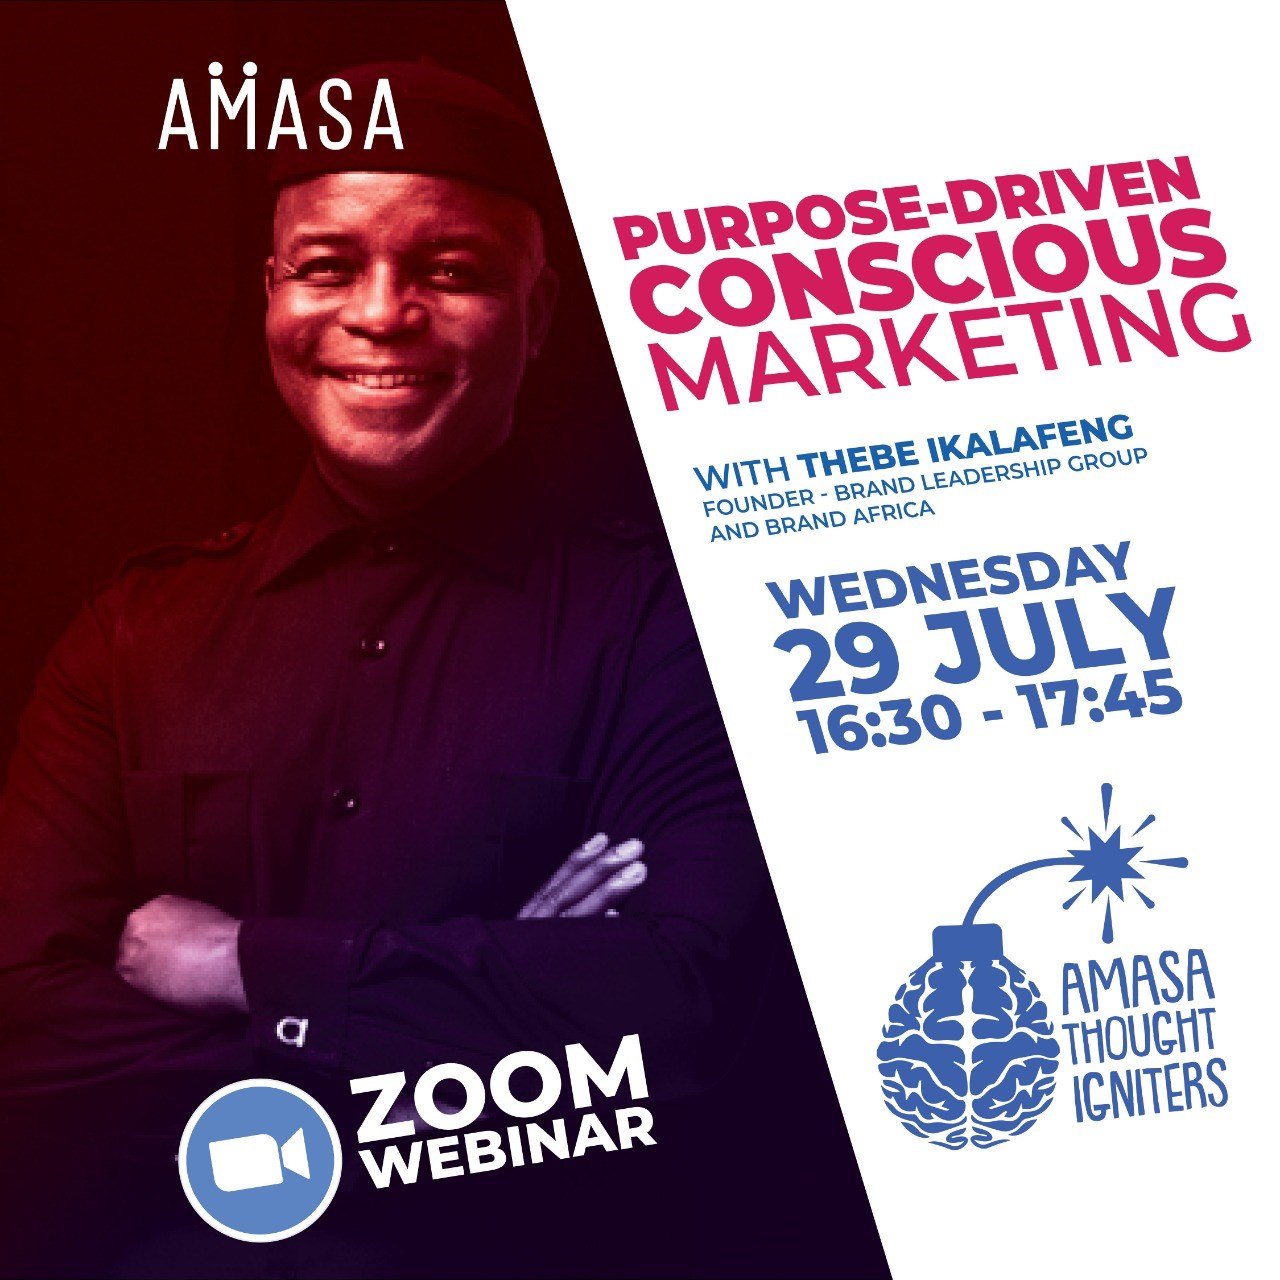 Amasa Ignite Webinar Forum - Purpose-driven conscious marketing